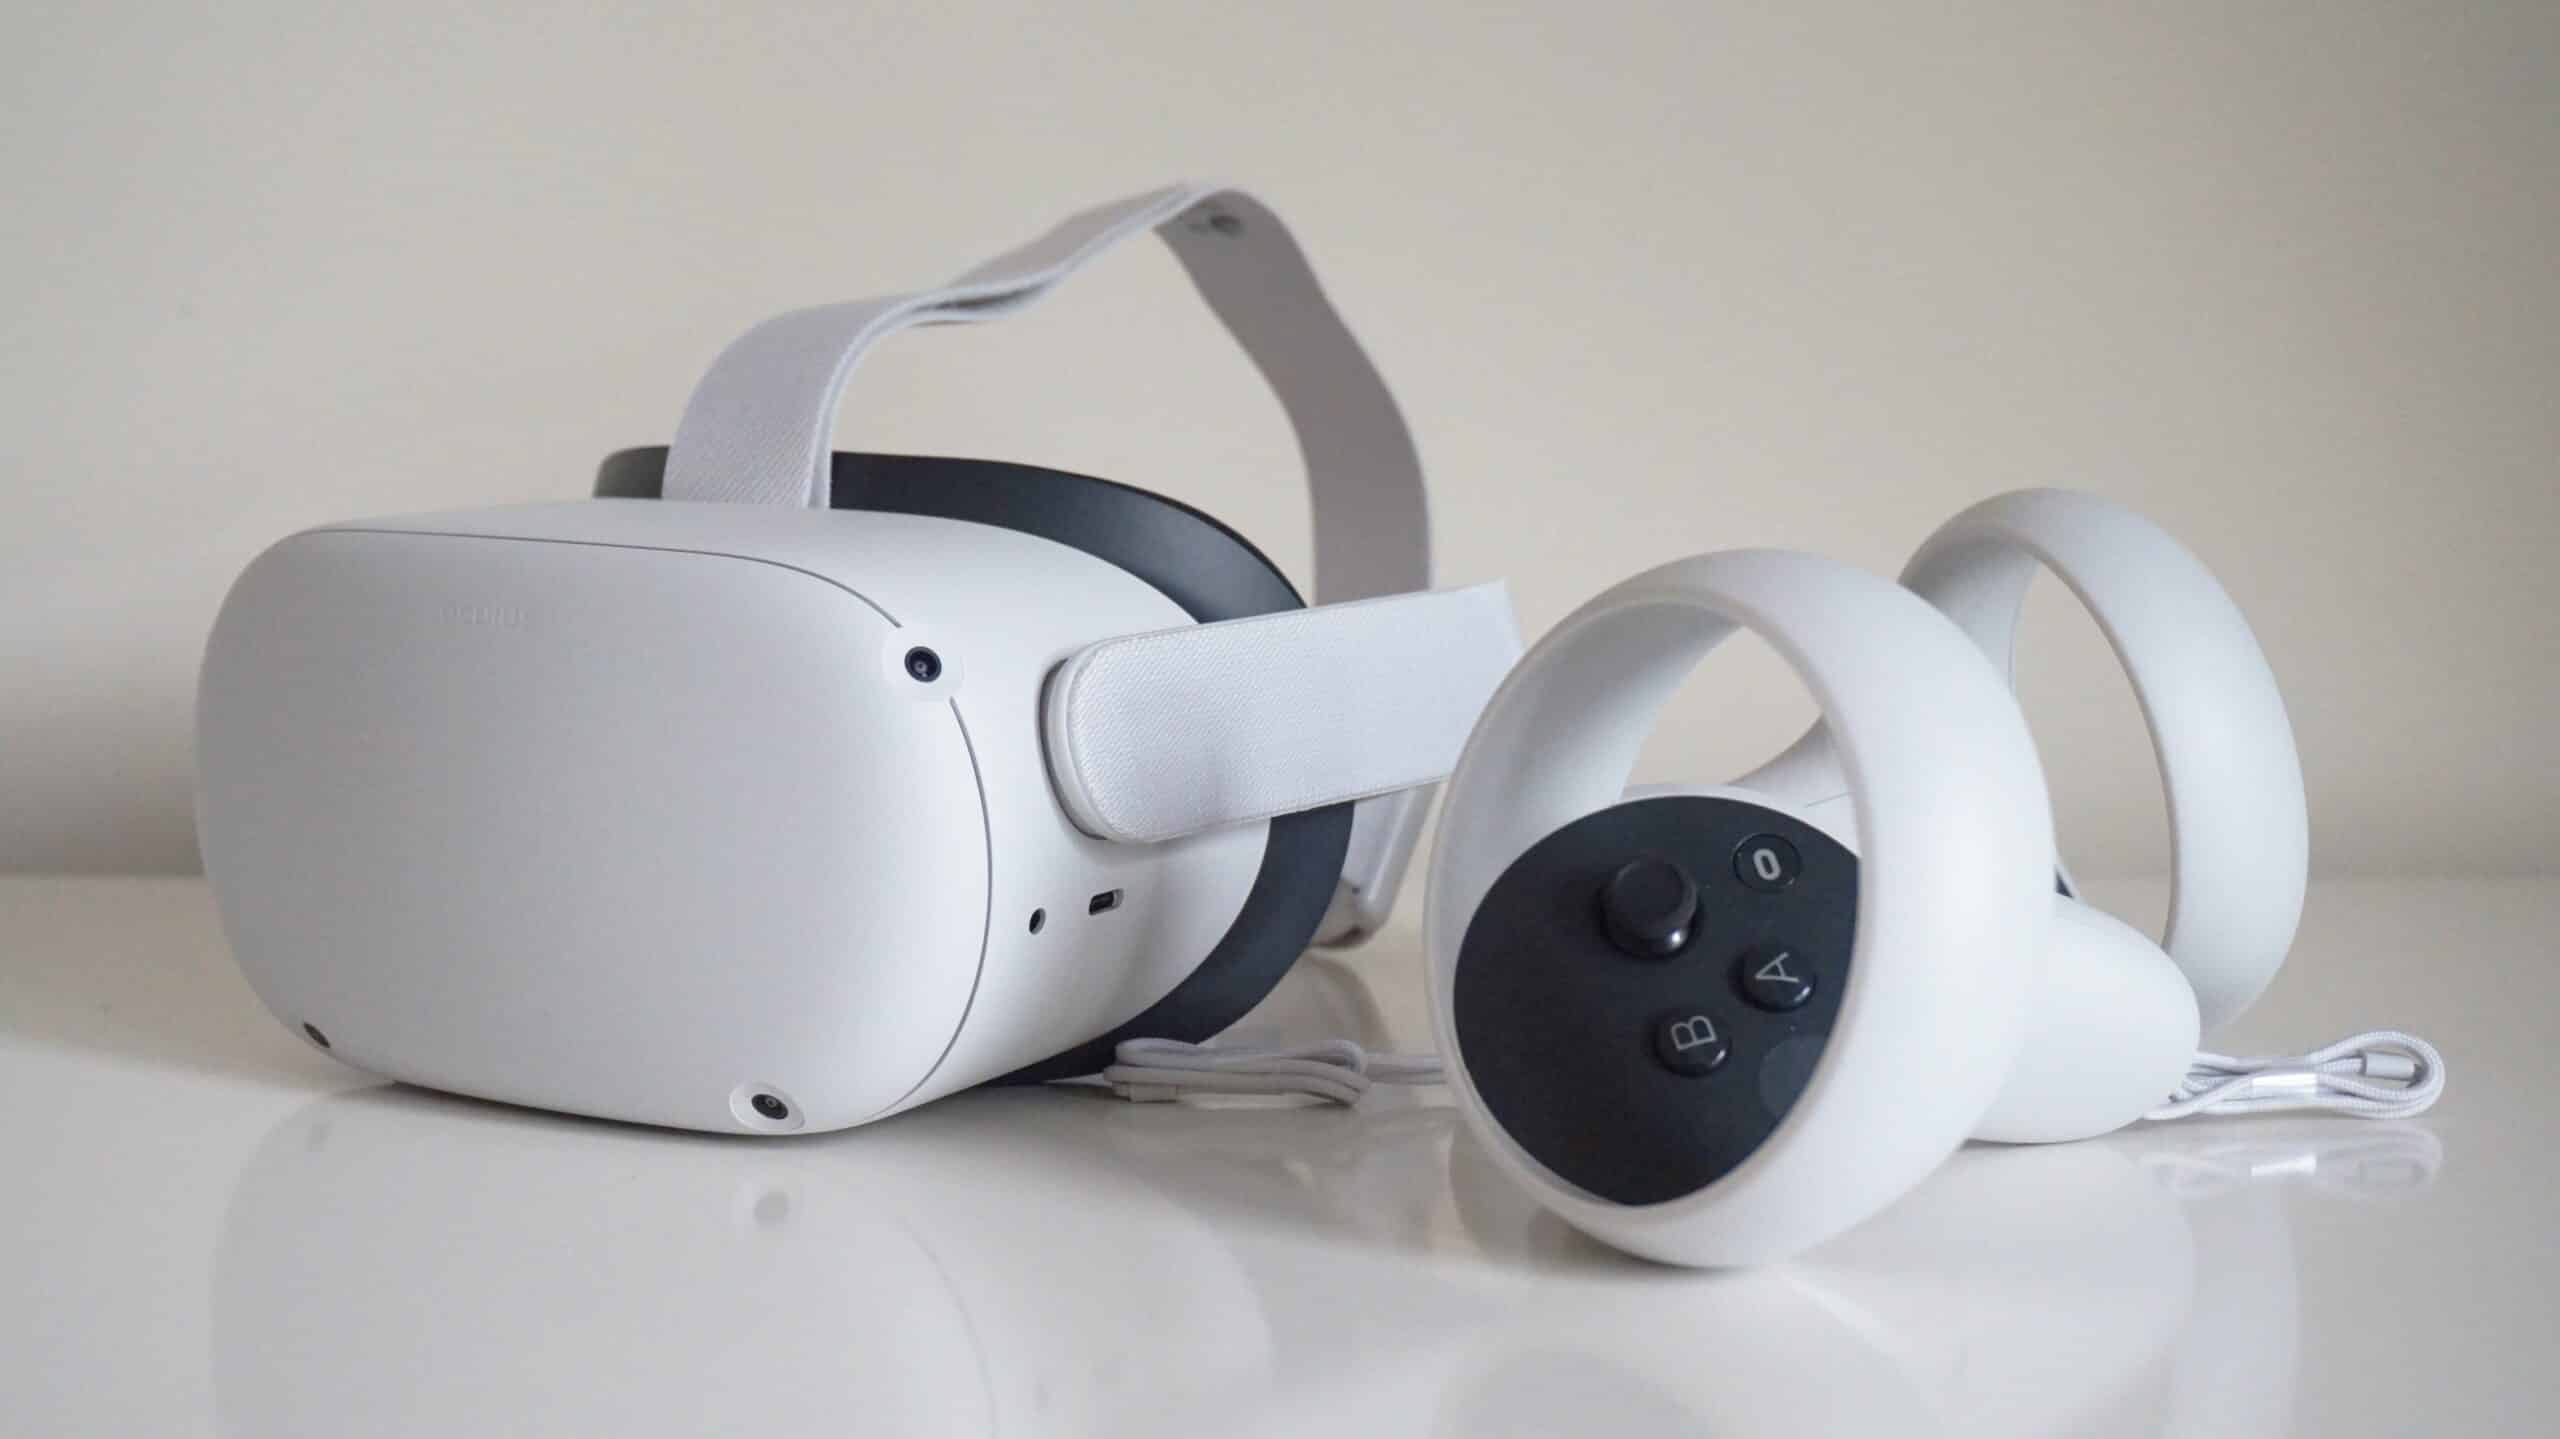 Oculus Quest 2 innovate gadgets